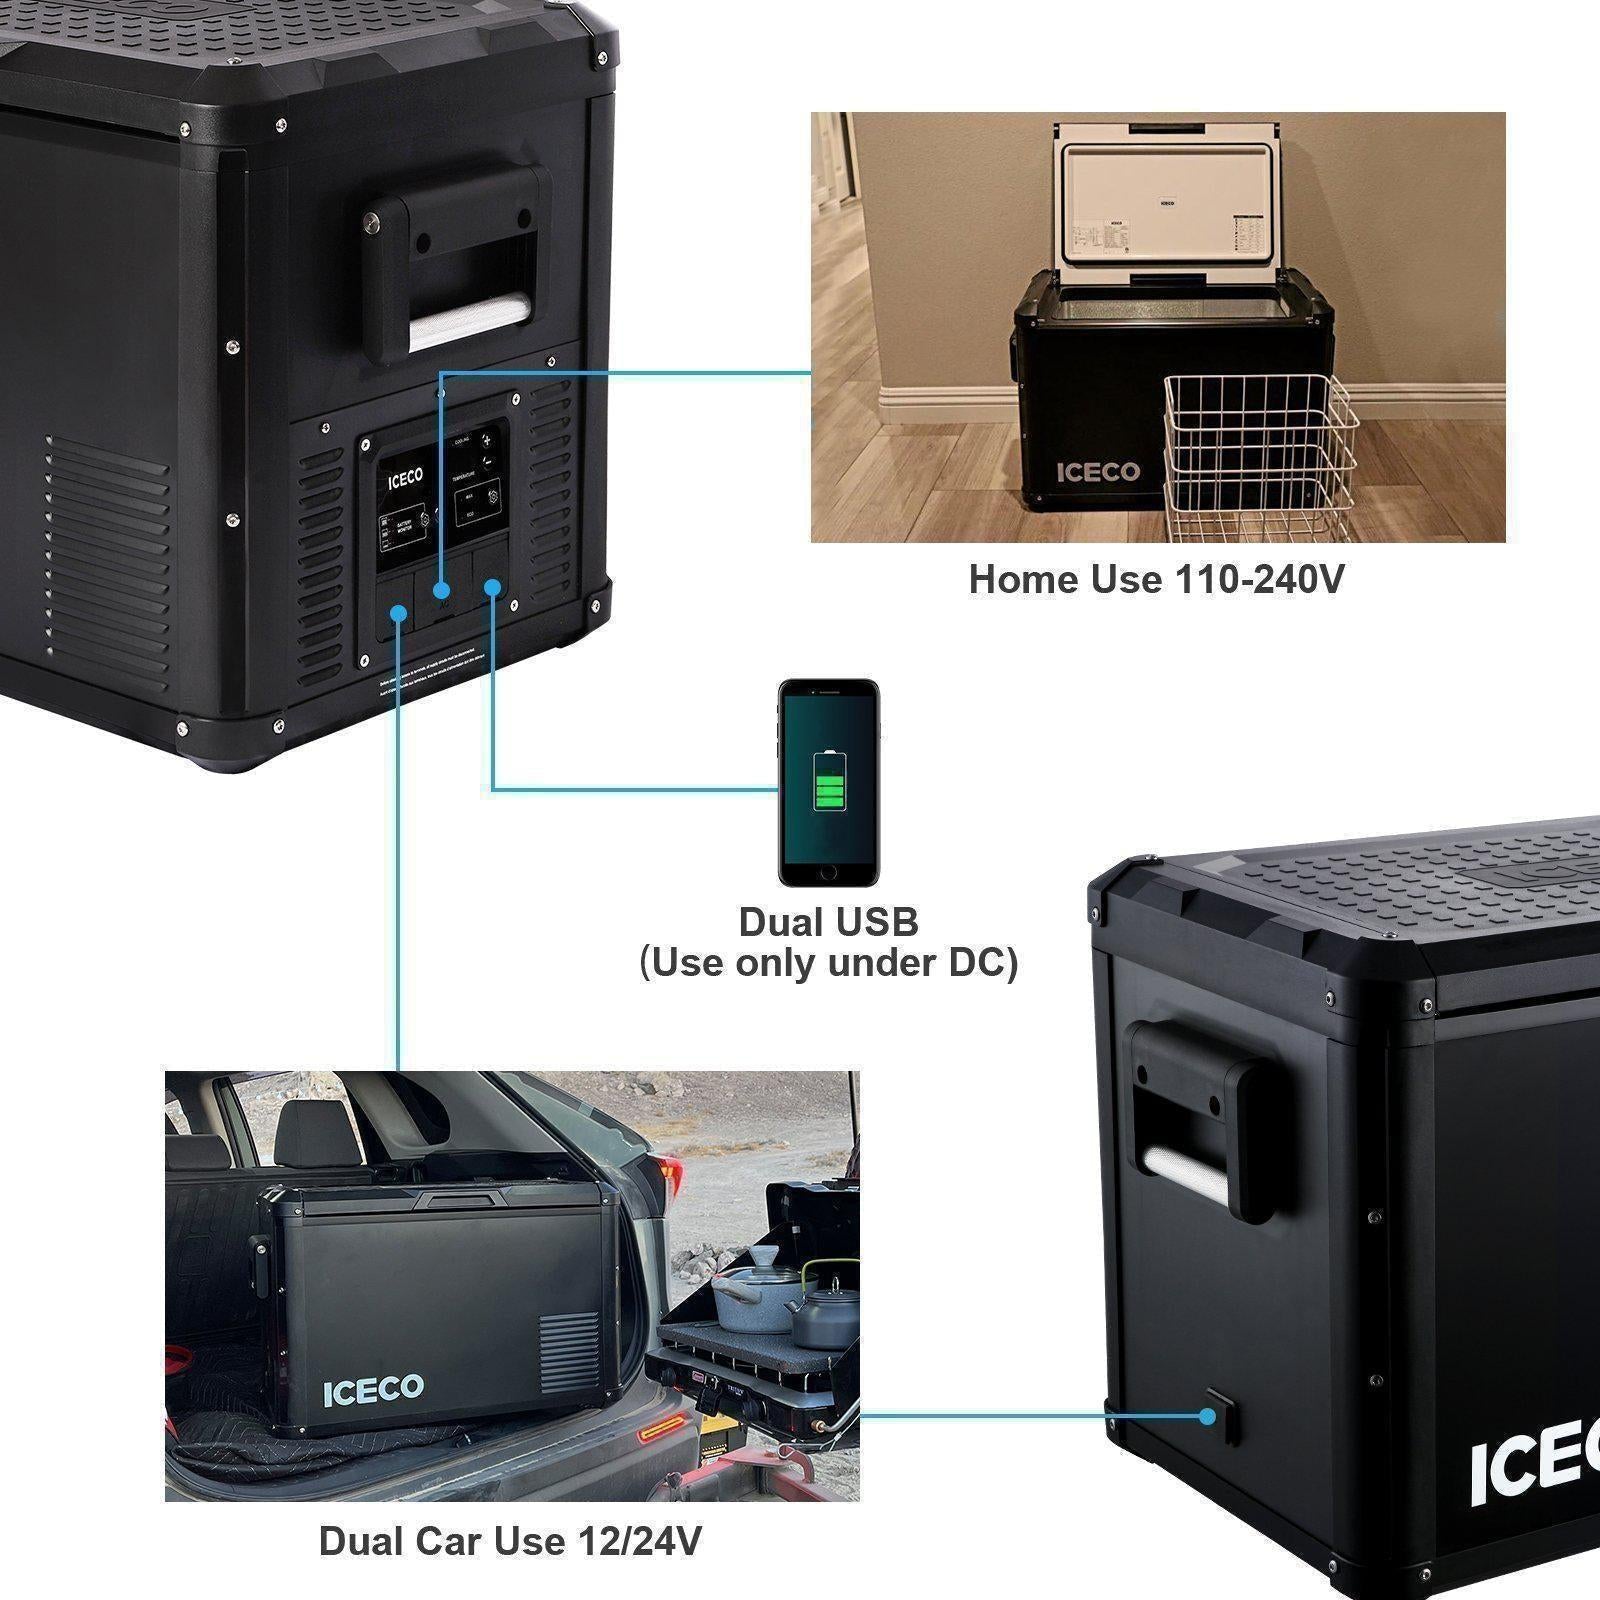 VL45ProS Single Zone Portable Fridge Freezer | ICECO